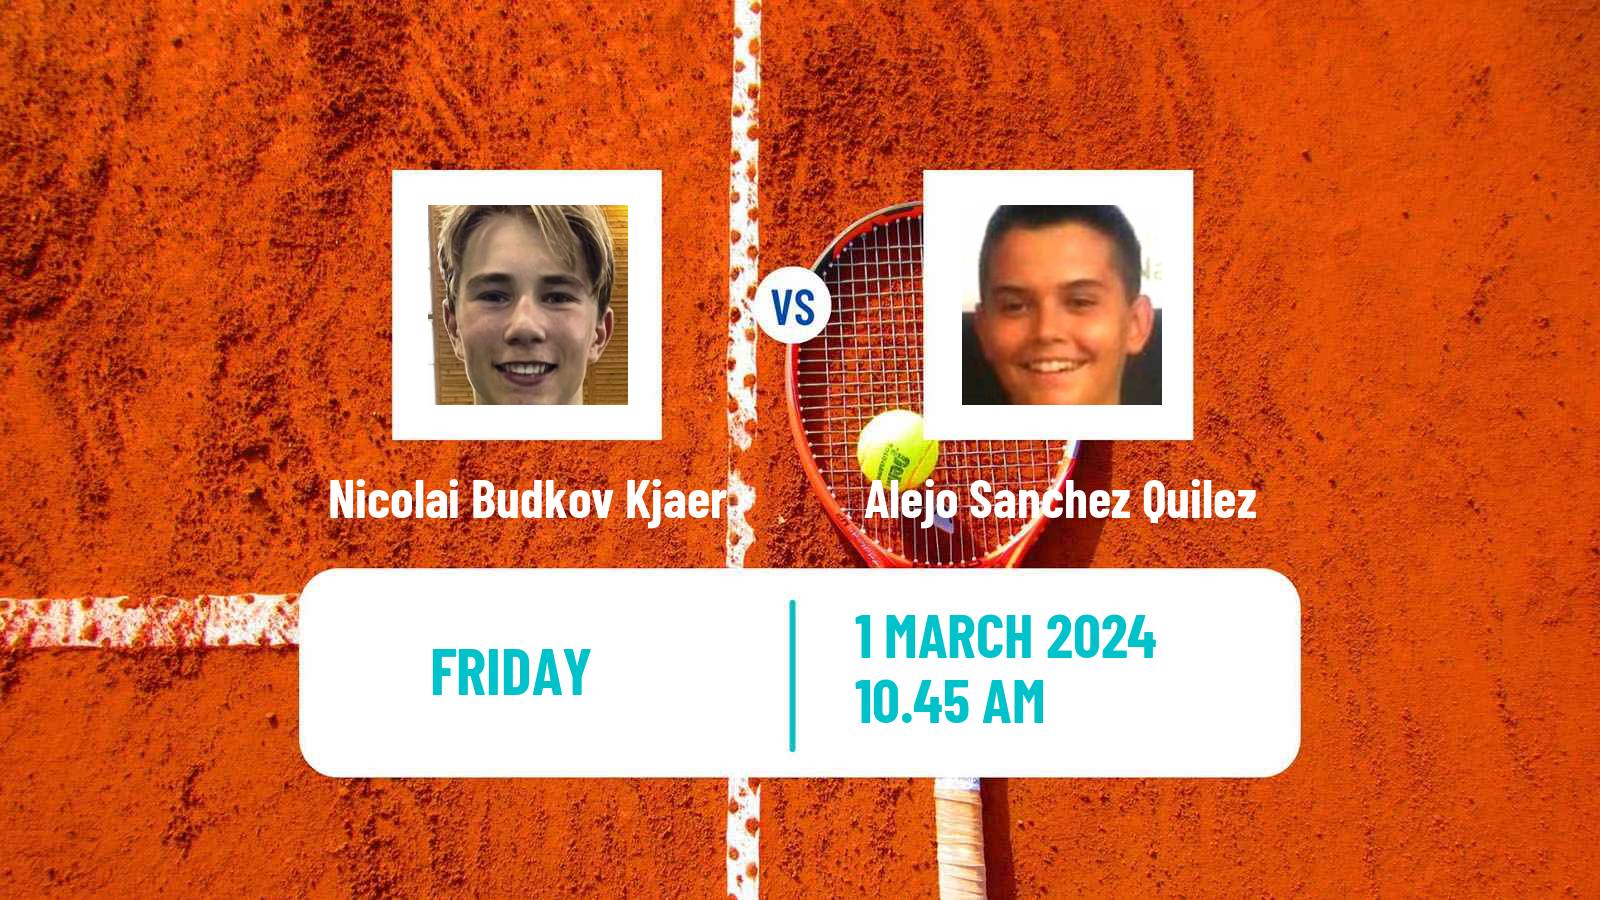 Tennis ITF M15 Villena 2 Men Nicolai Budkov Kjaer - Alejo Sanchez Quilez